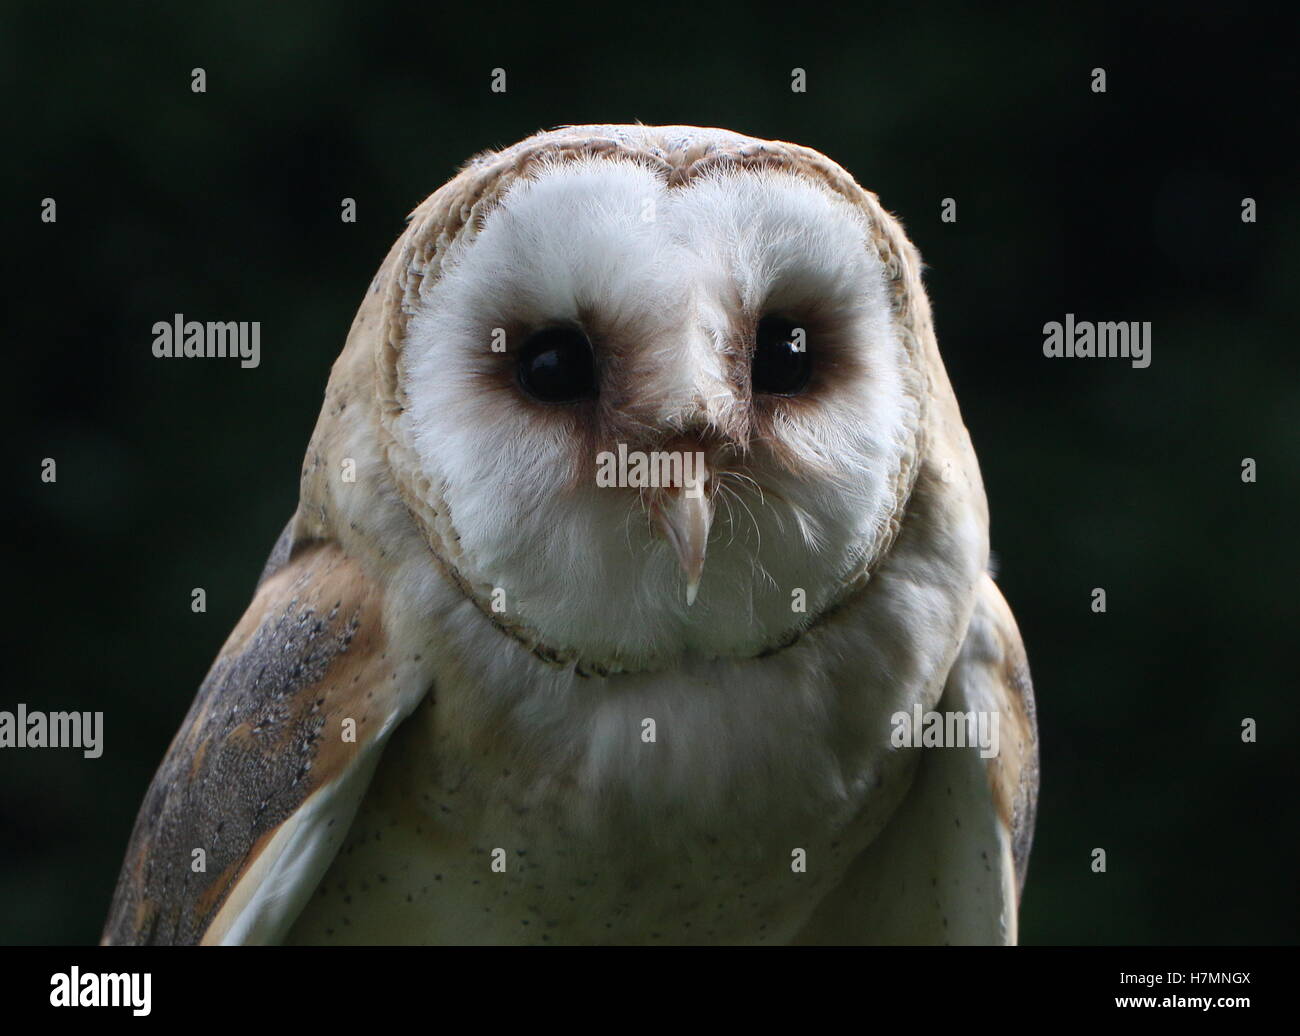 European Barn owl (Tyto alba) portrait, facing the camera Stock Photo